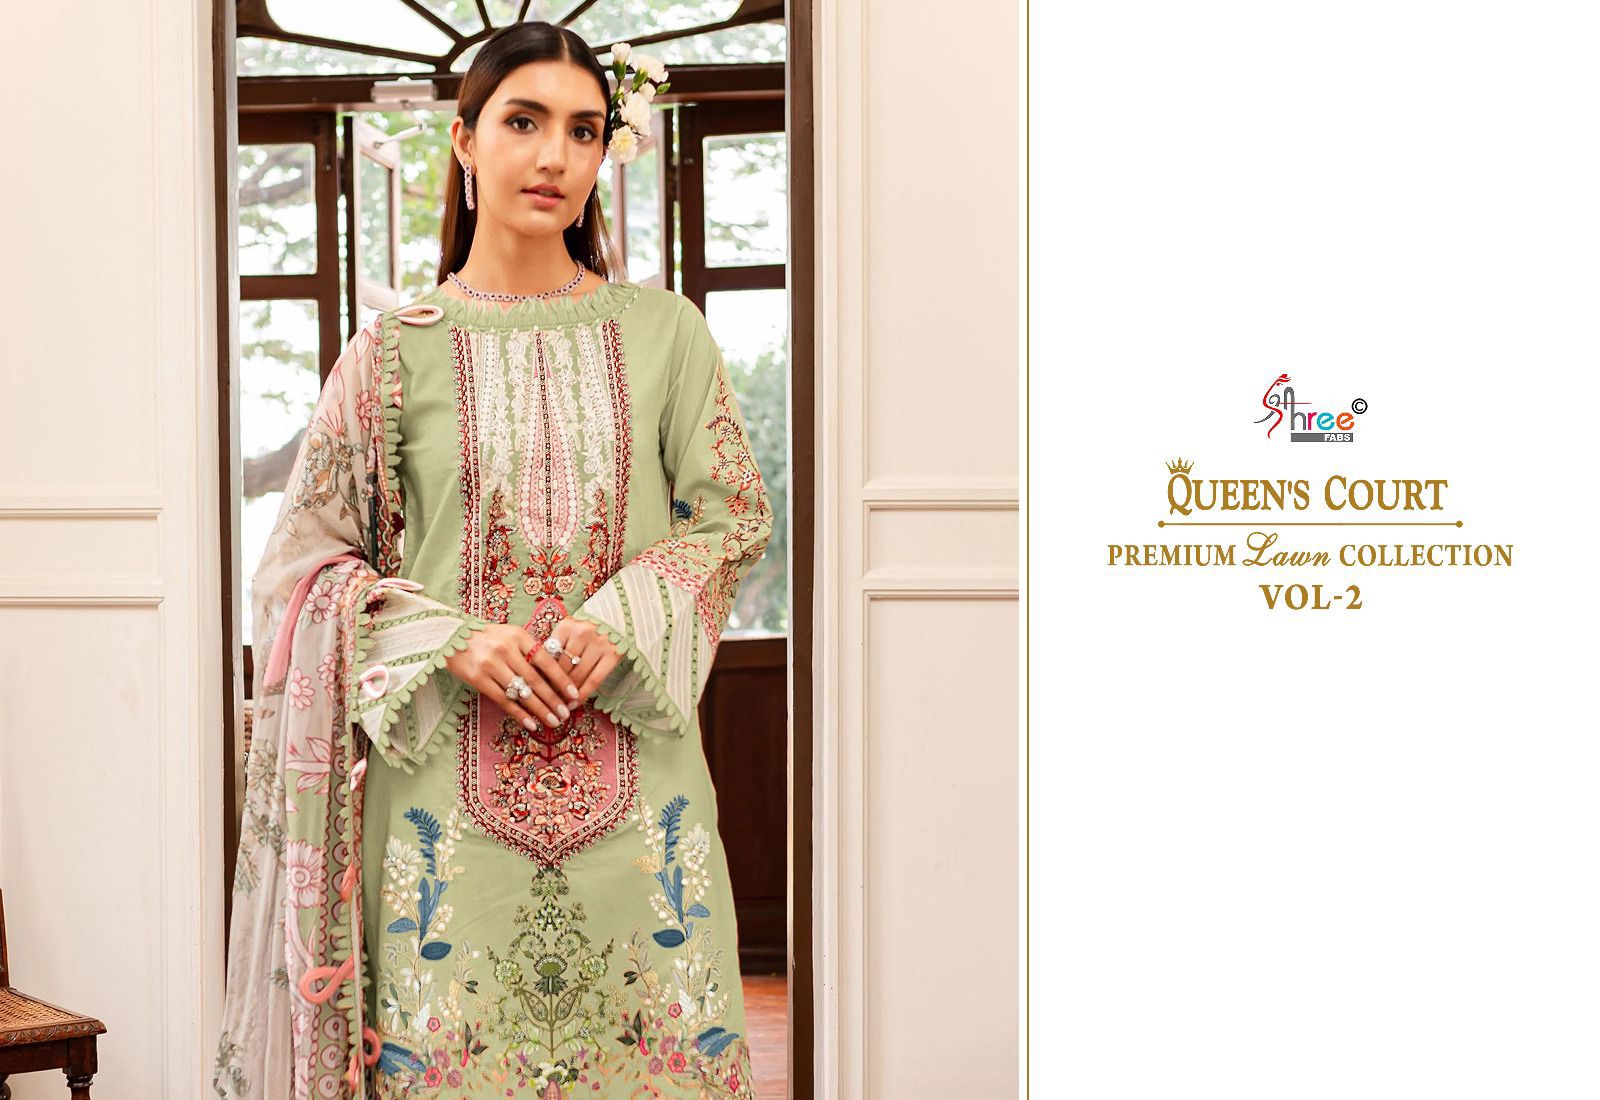 Queens Court Premium Lawn Collection Vol 2 Shree Fabs Cotton Pakistani Patch Work Suits Wholesaler India